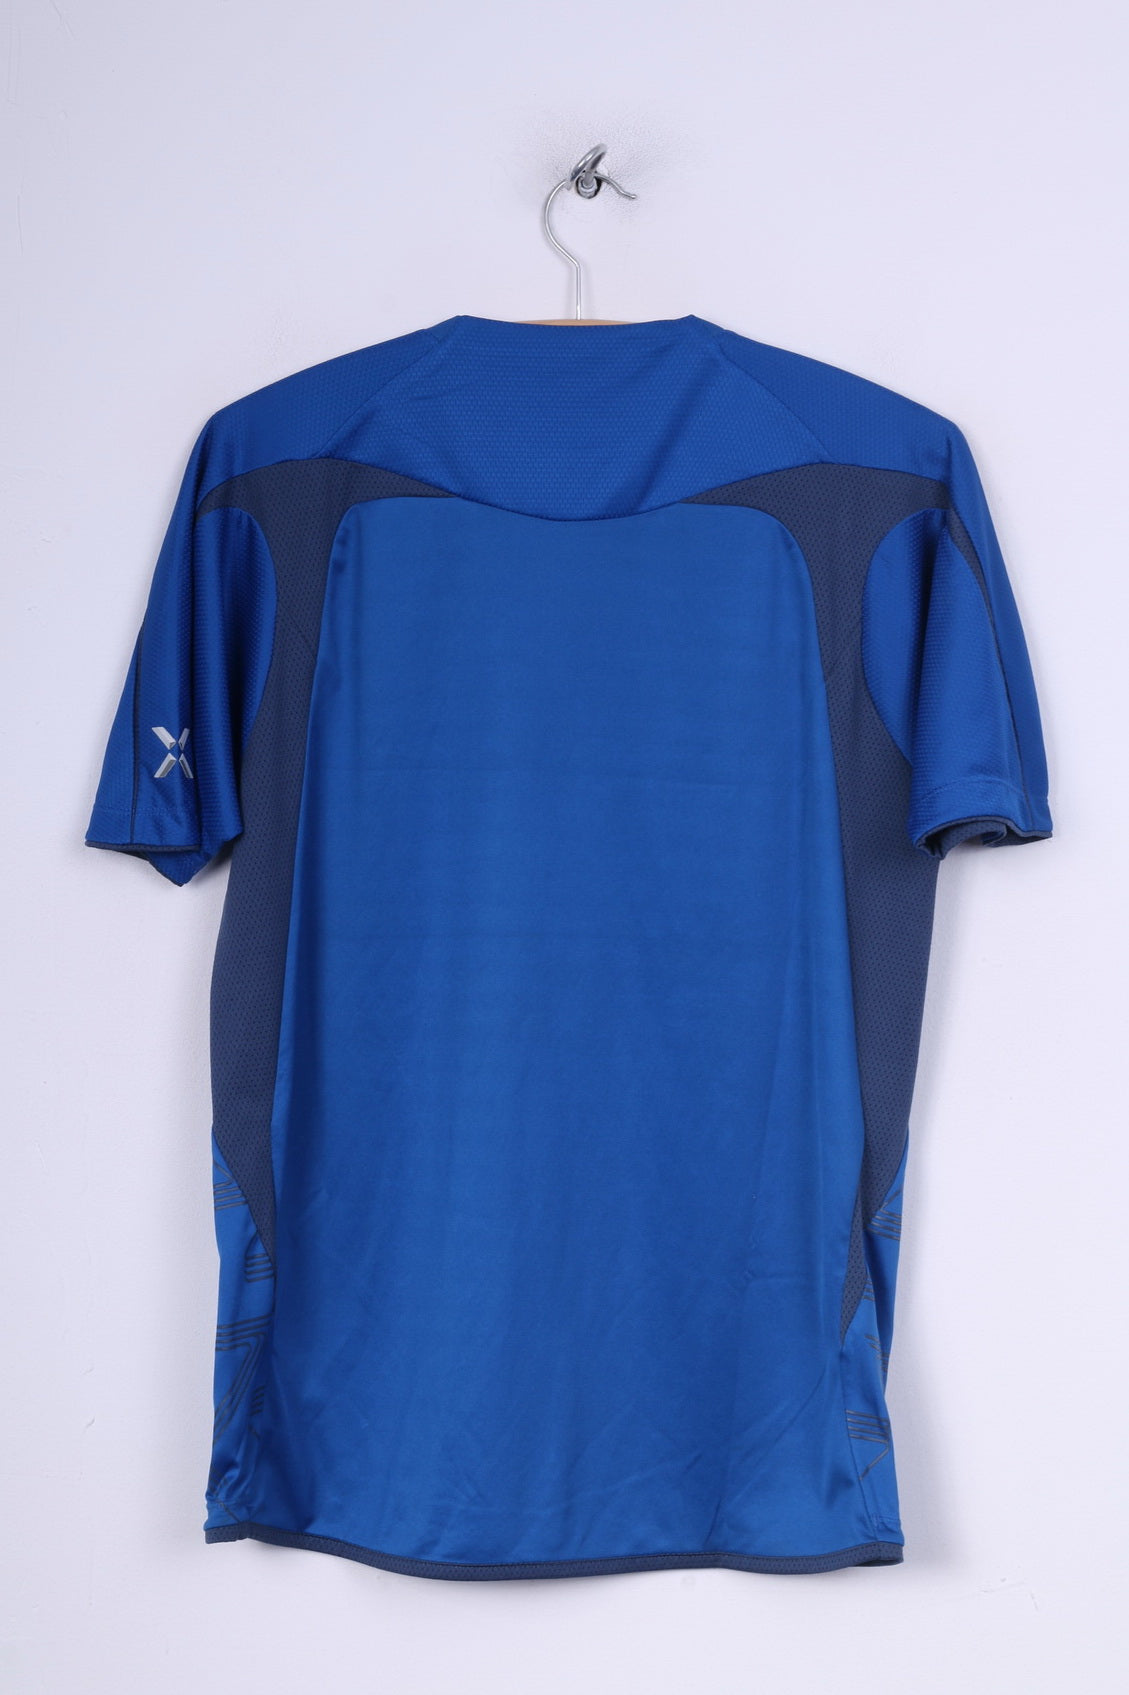 Umbro Boys XL XLB 158cm Shirt Blue Jersey Sportswear Top Crew Neck